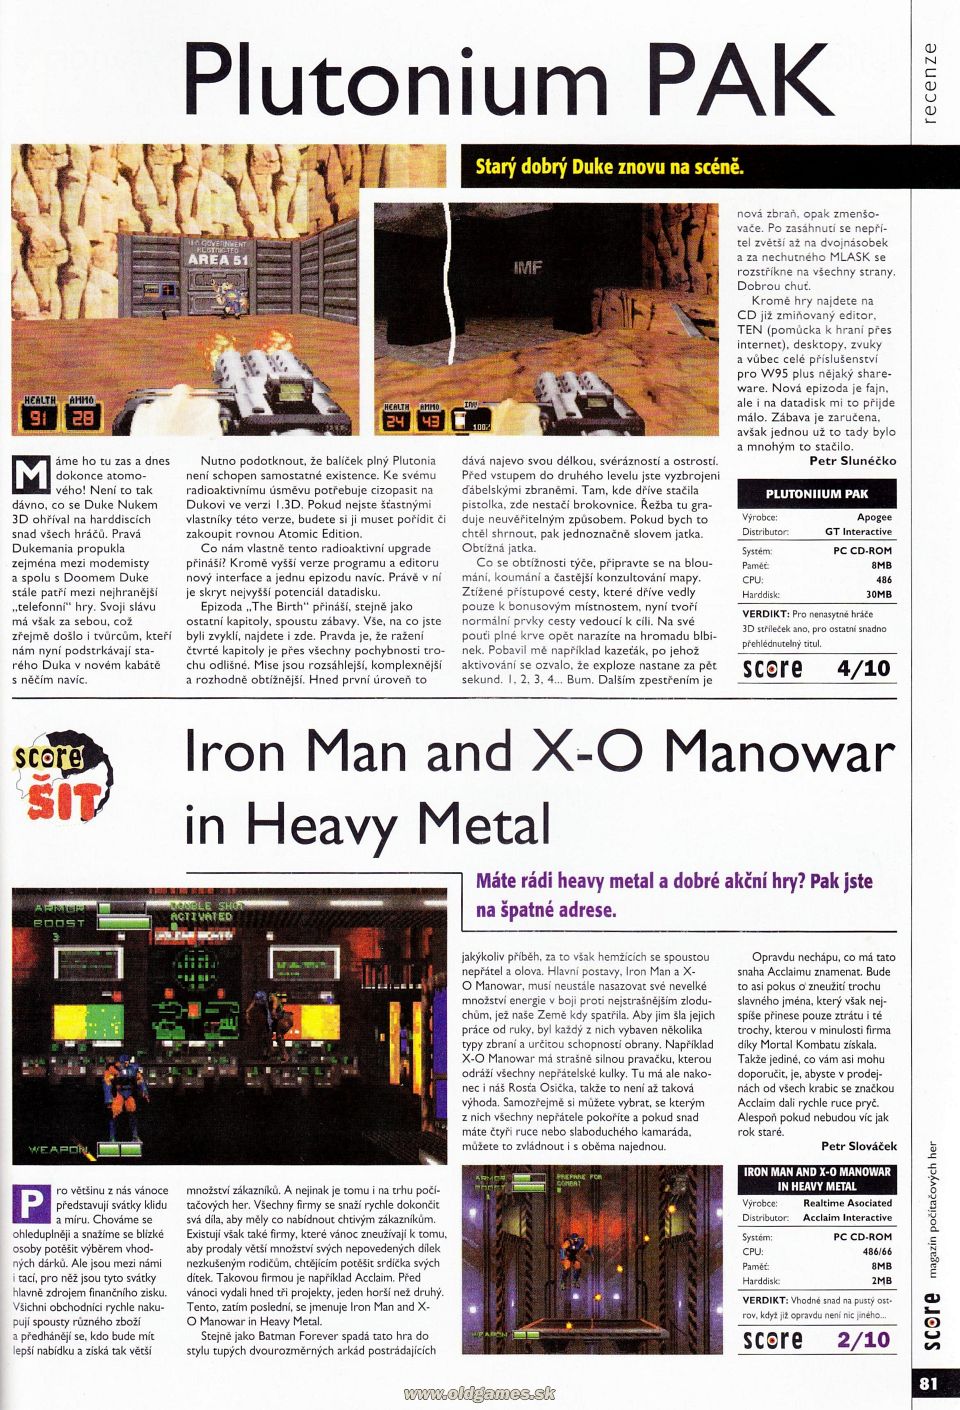 Duke Nukem 3D - Plutonium PAK, Iron Man and X-O Manowar in Heavy Metal